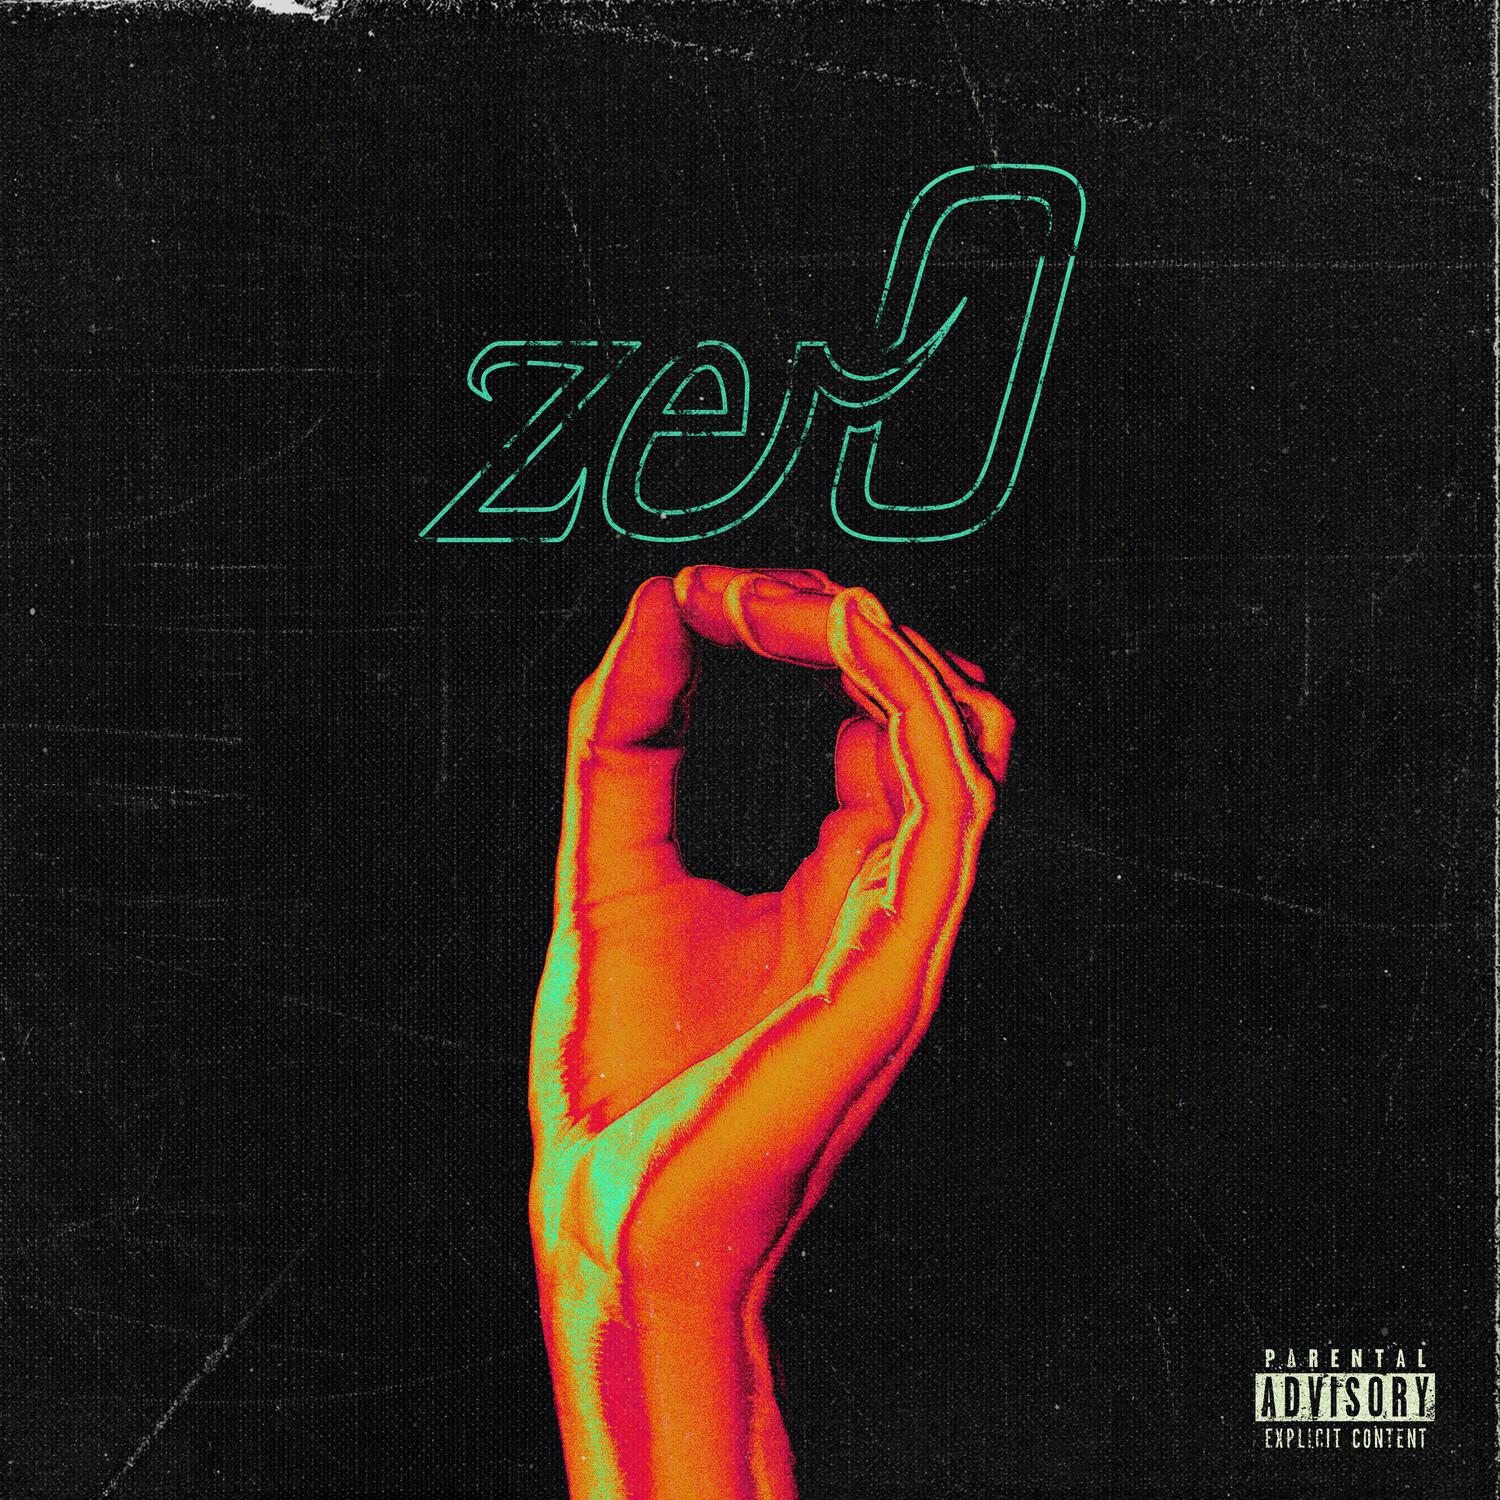 Scissors歌词 歌手Krewella-专辑zer0-单曲《Scissors》LRC歌词下载